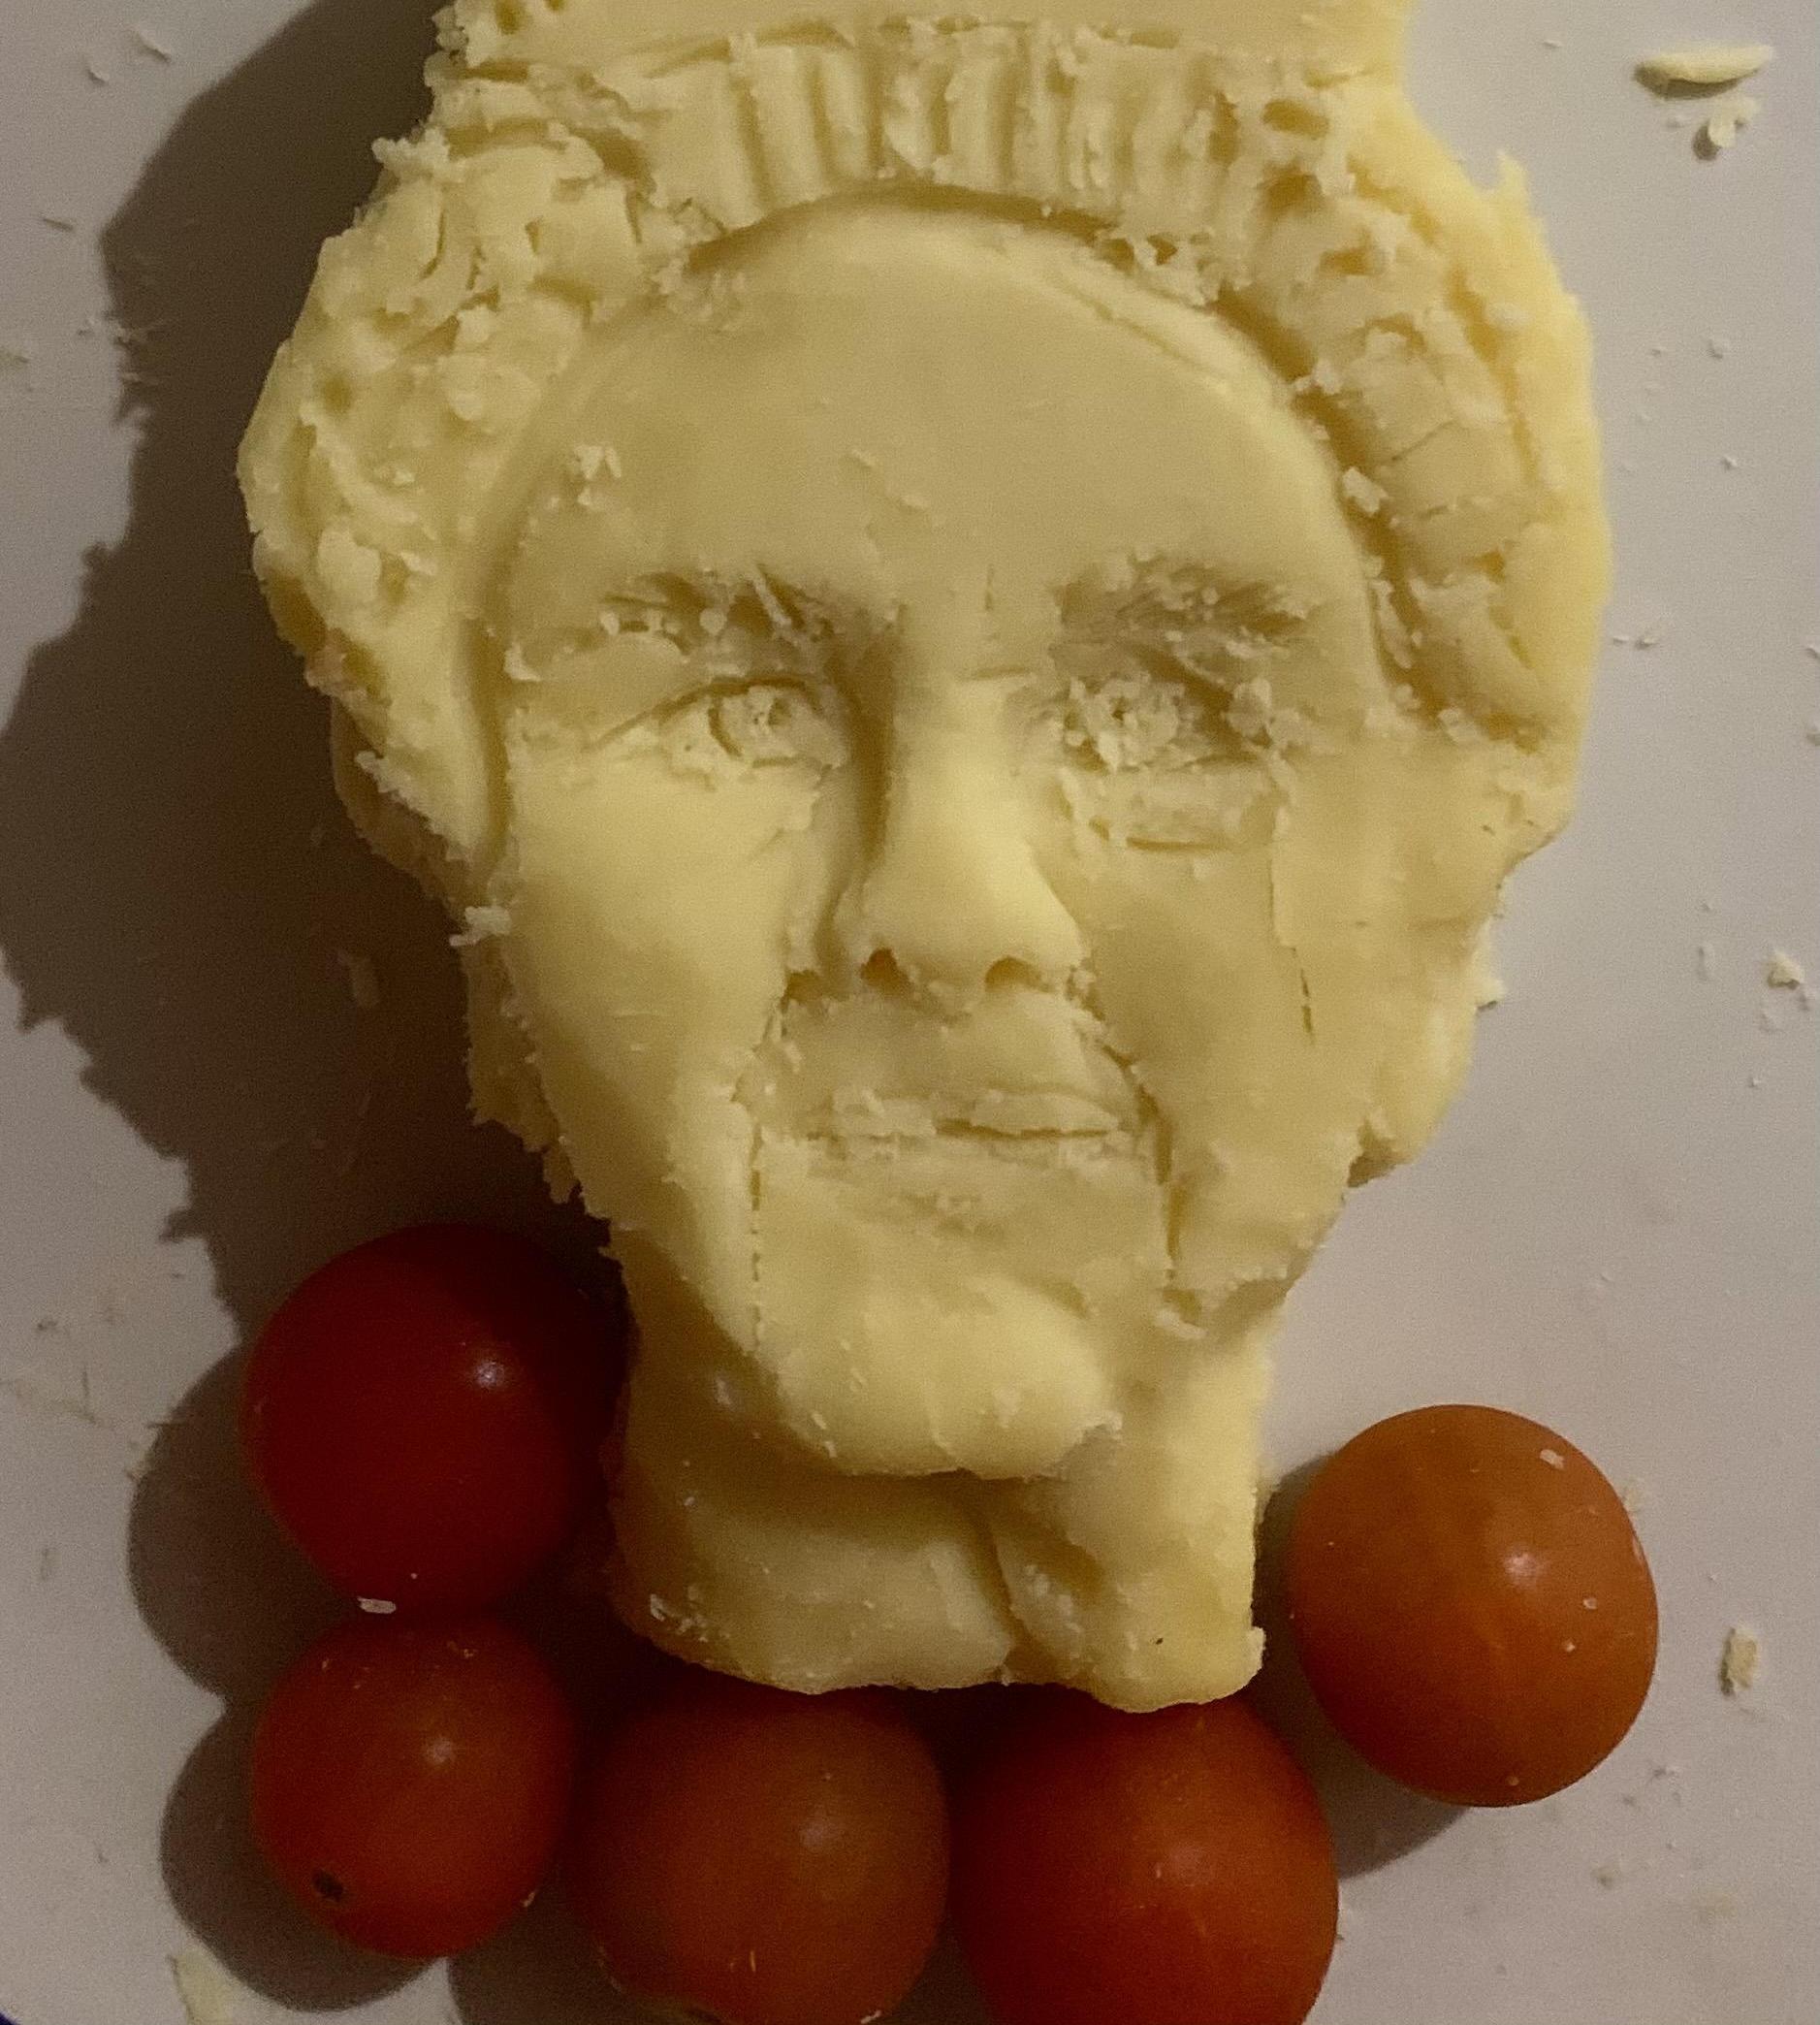 Queen Elizabeth II As a Block of Cheese